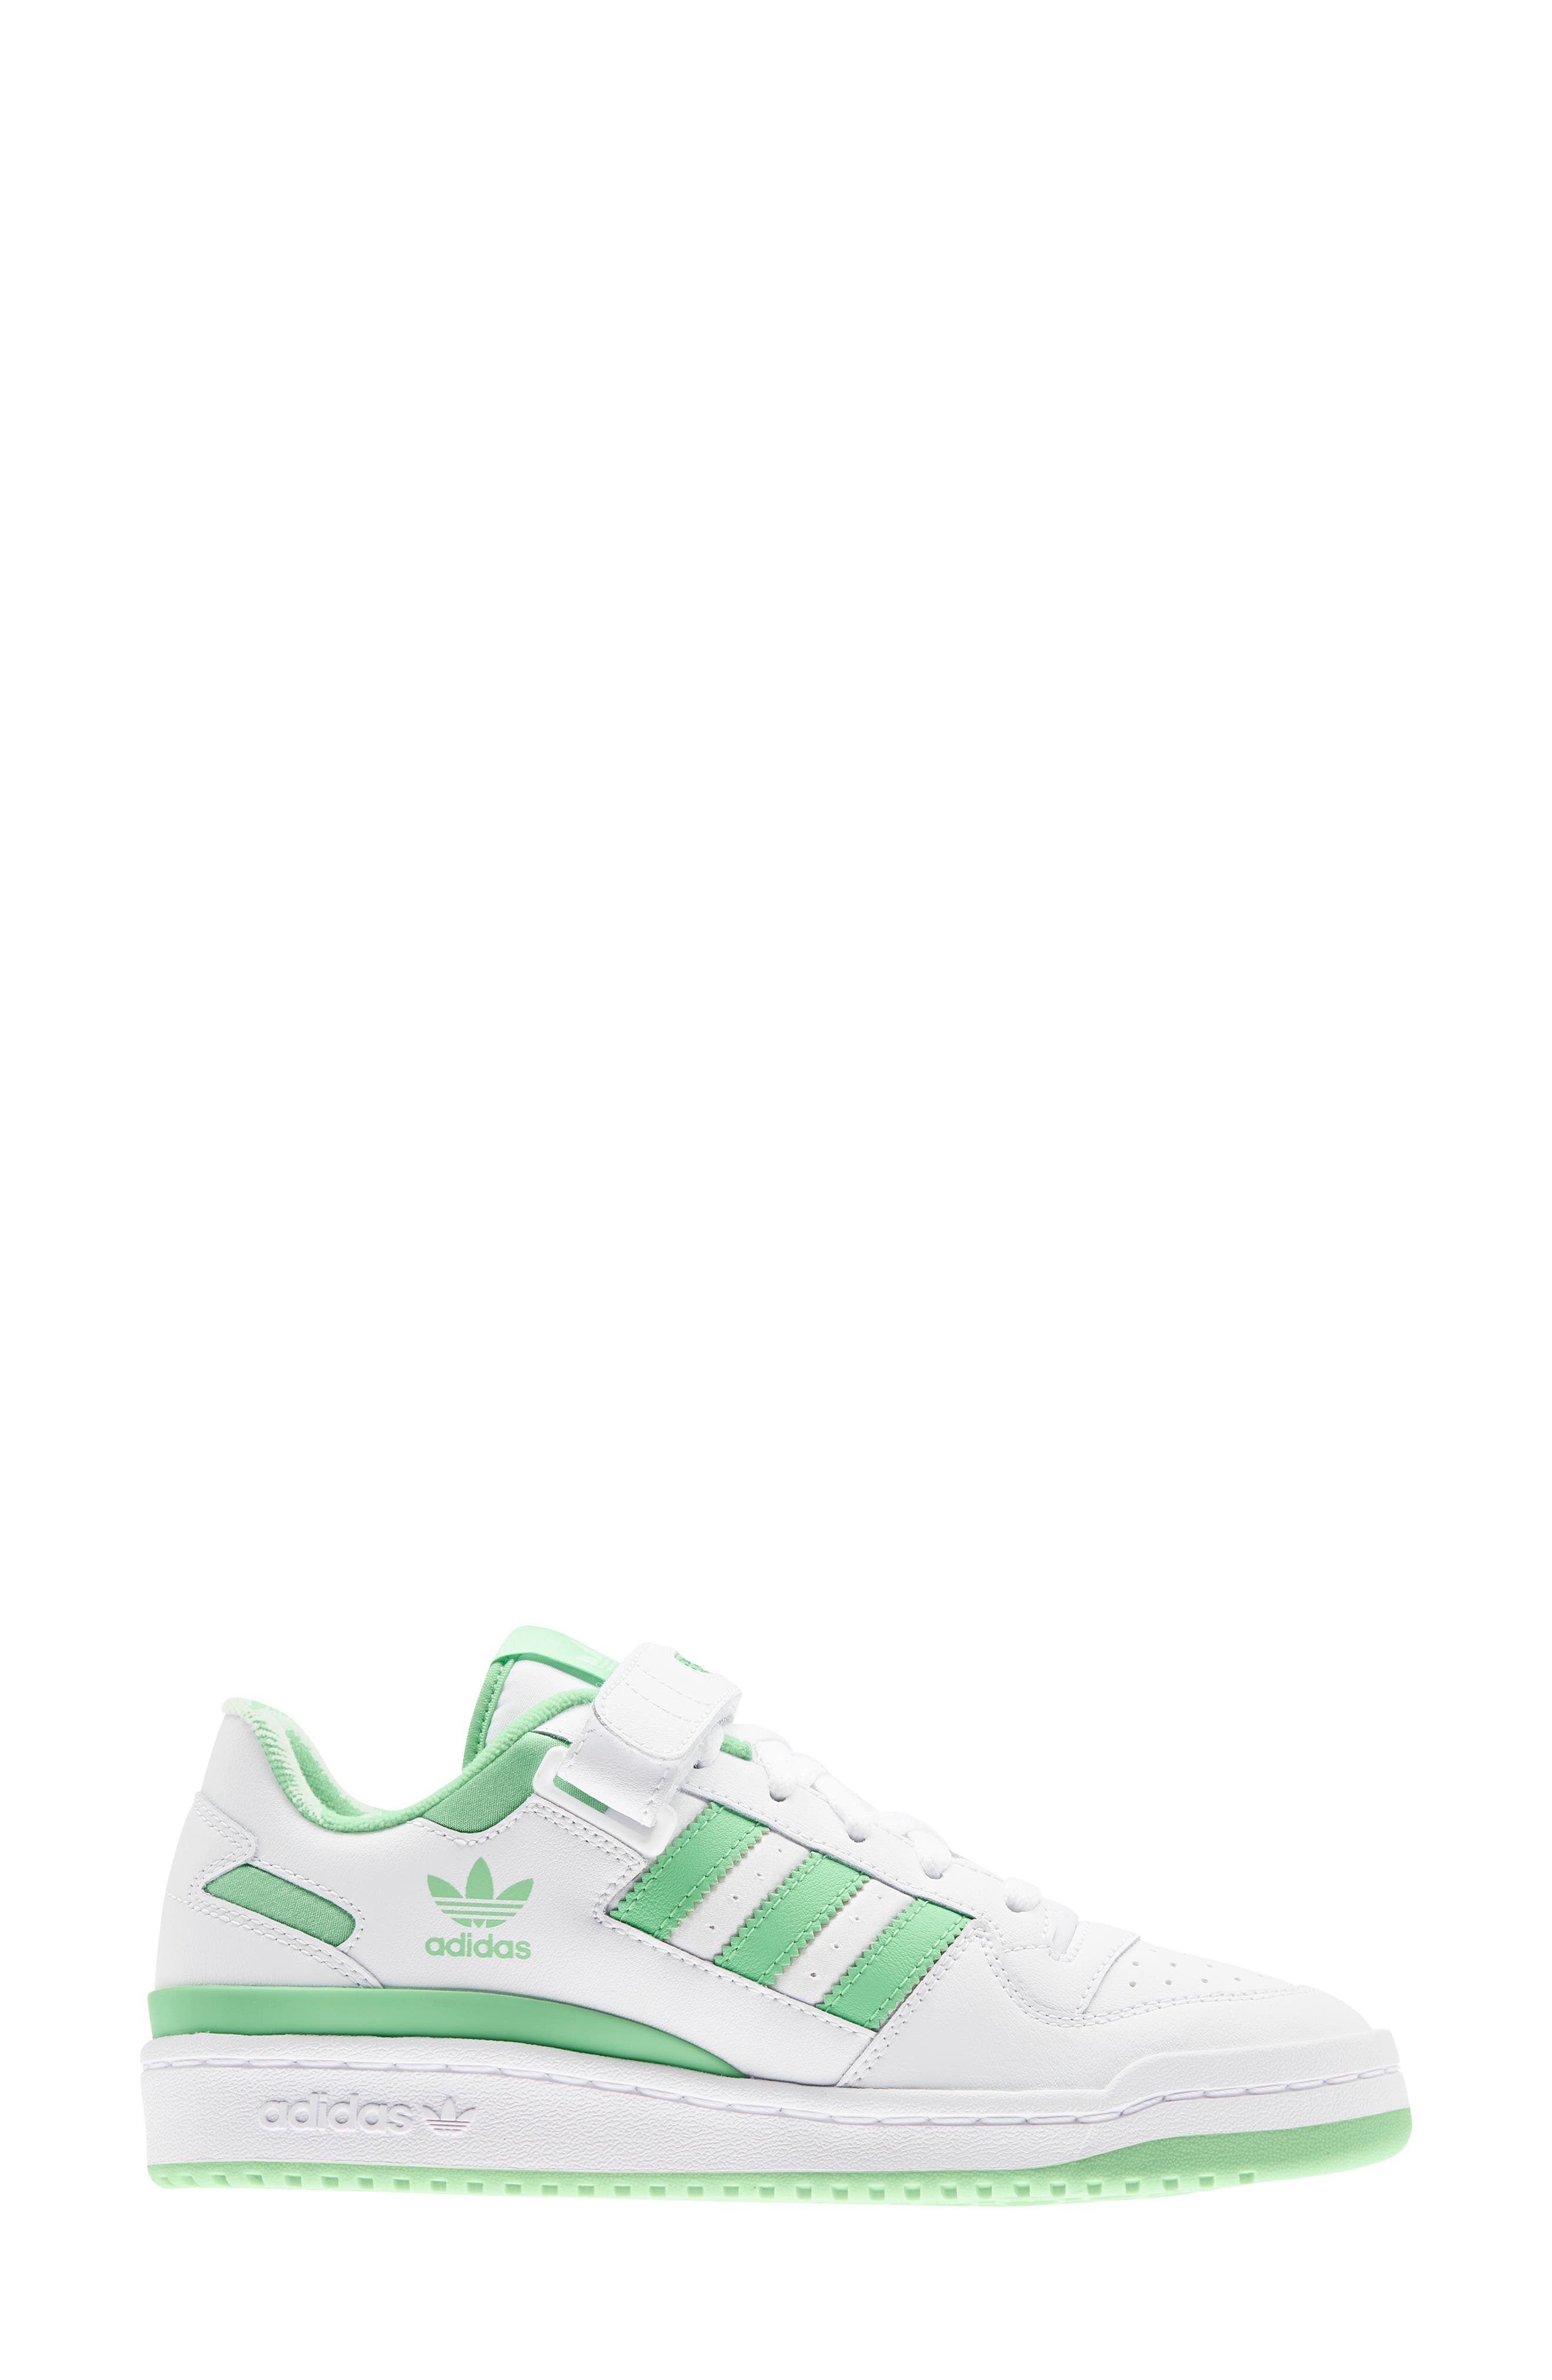 adidas forum low mint green